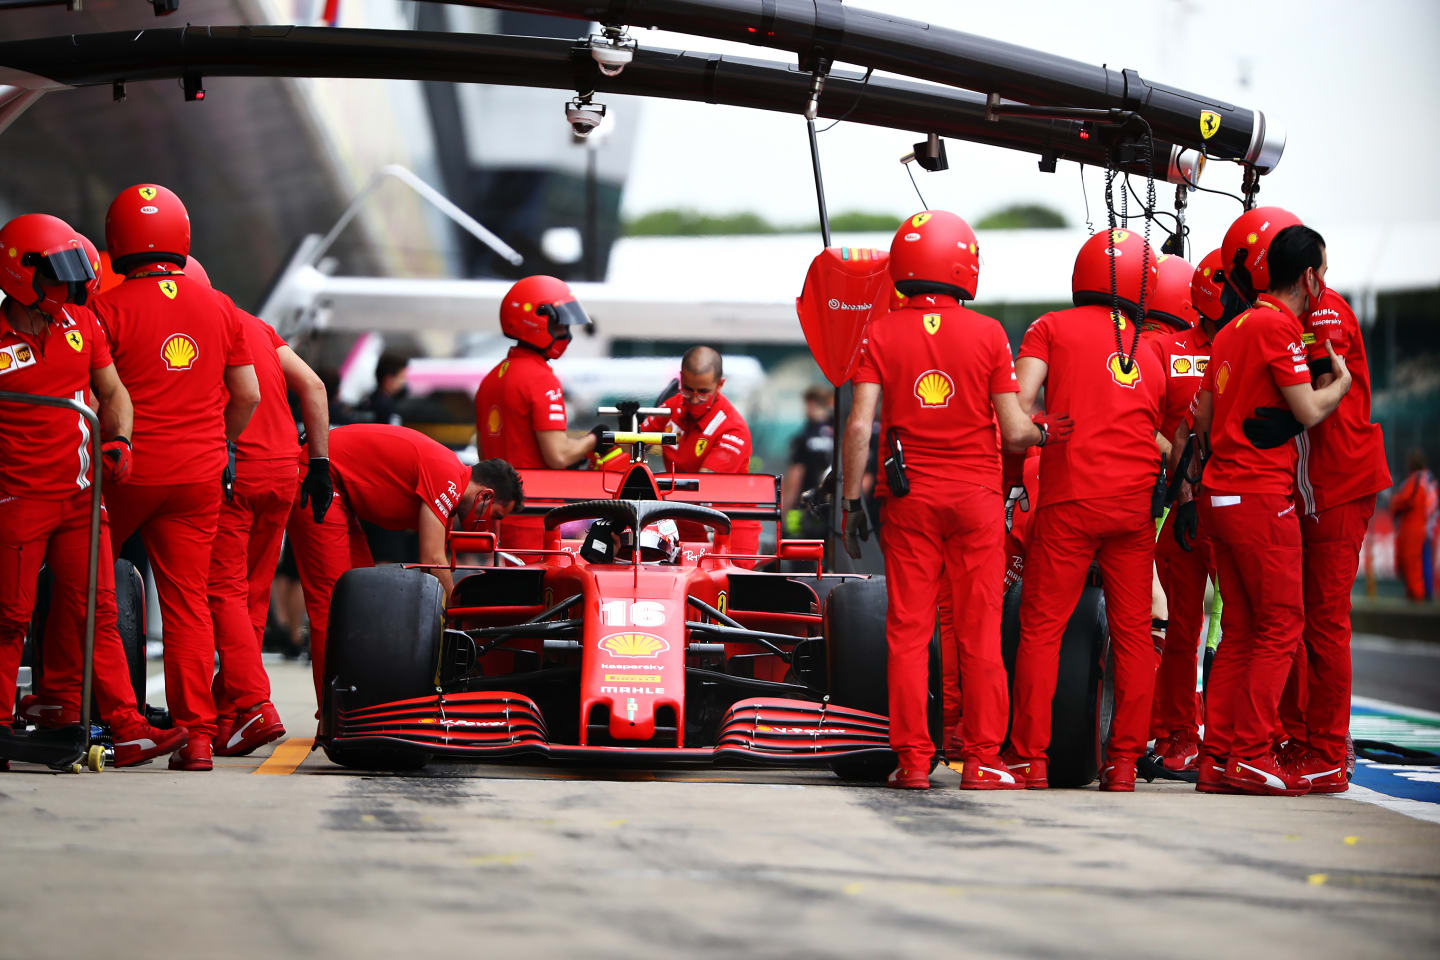 NORTHAMPTON, ENGLAND - AUGUST 07: Charles Leclerc of Monaco driving the (16) Scuderia Ferrari